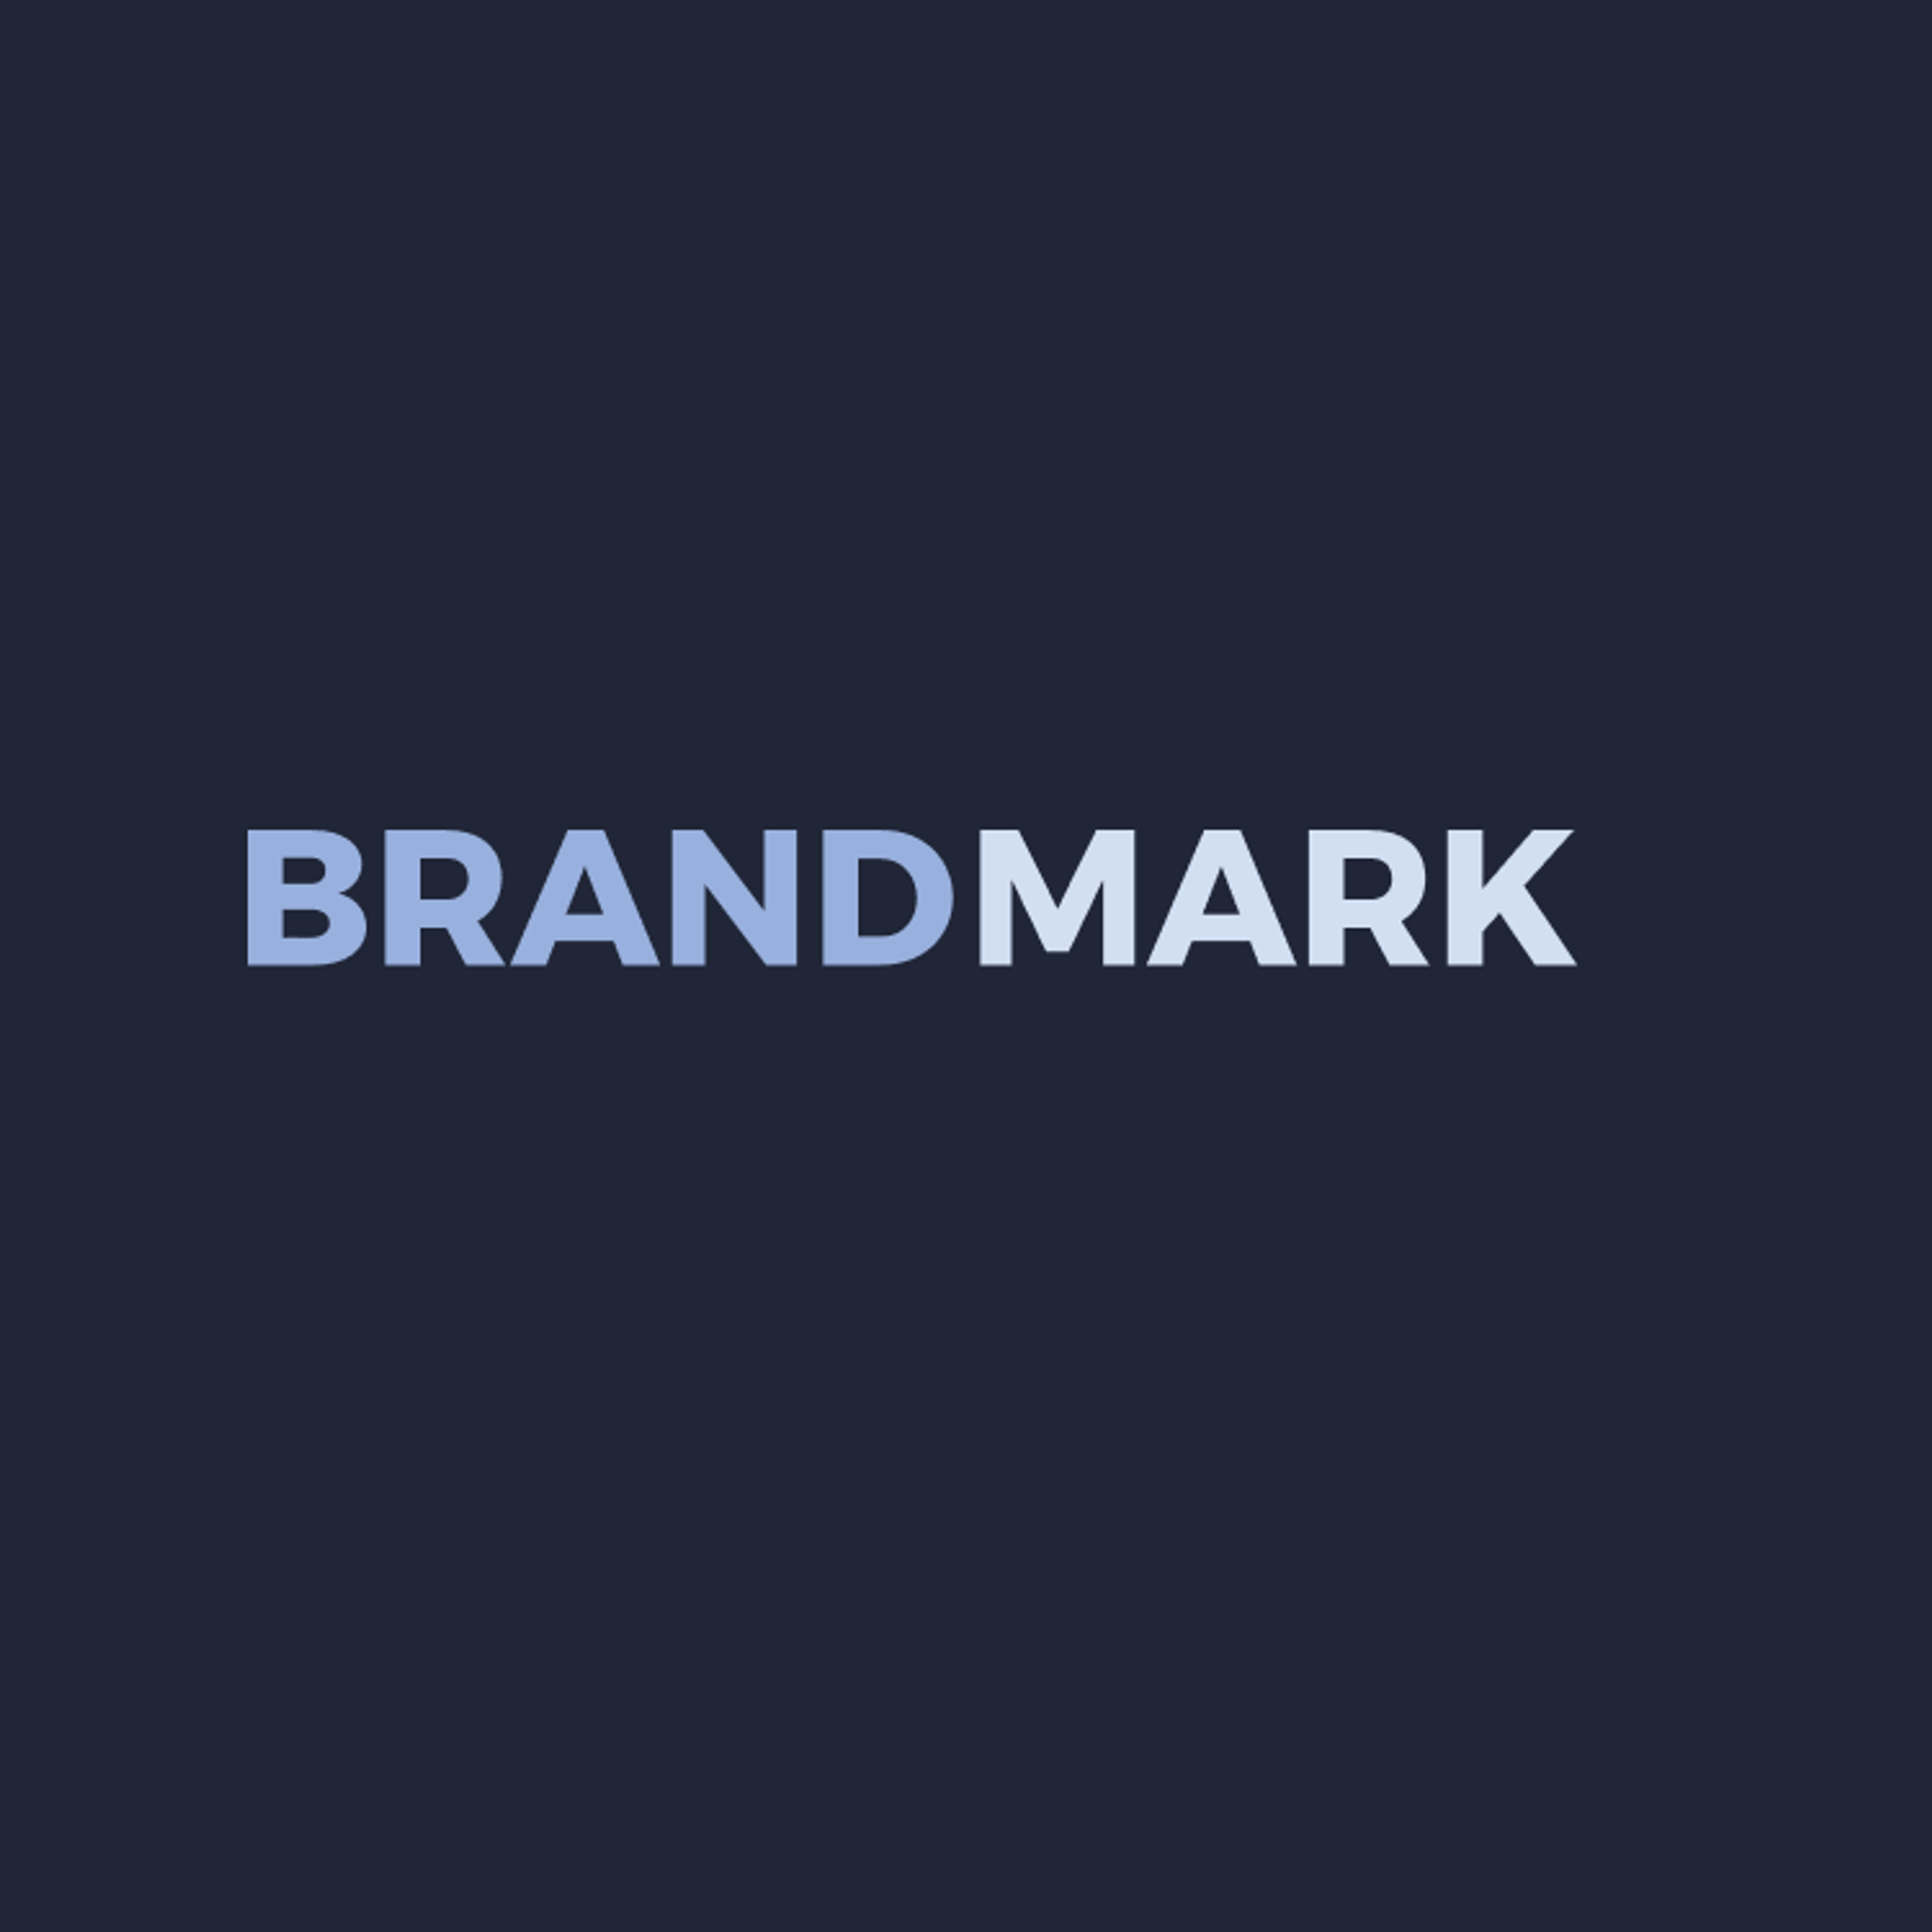 Brandmark